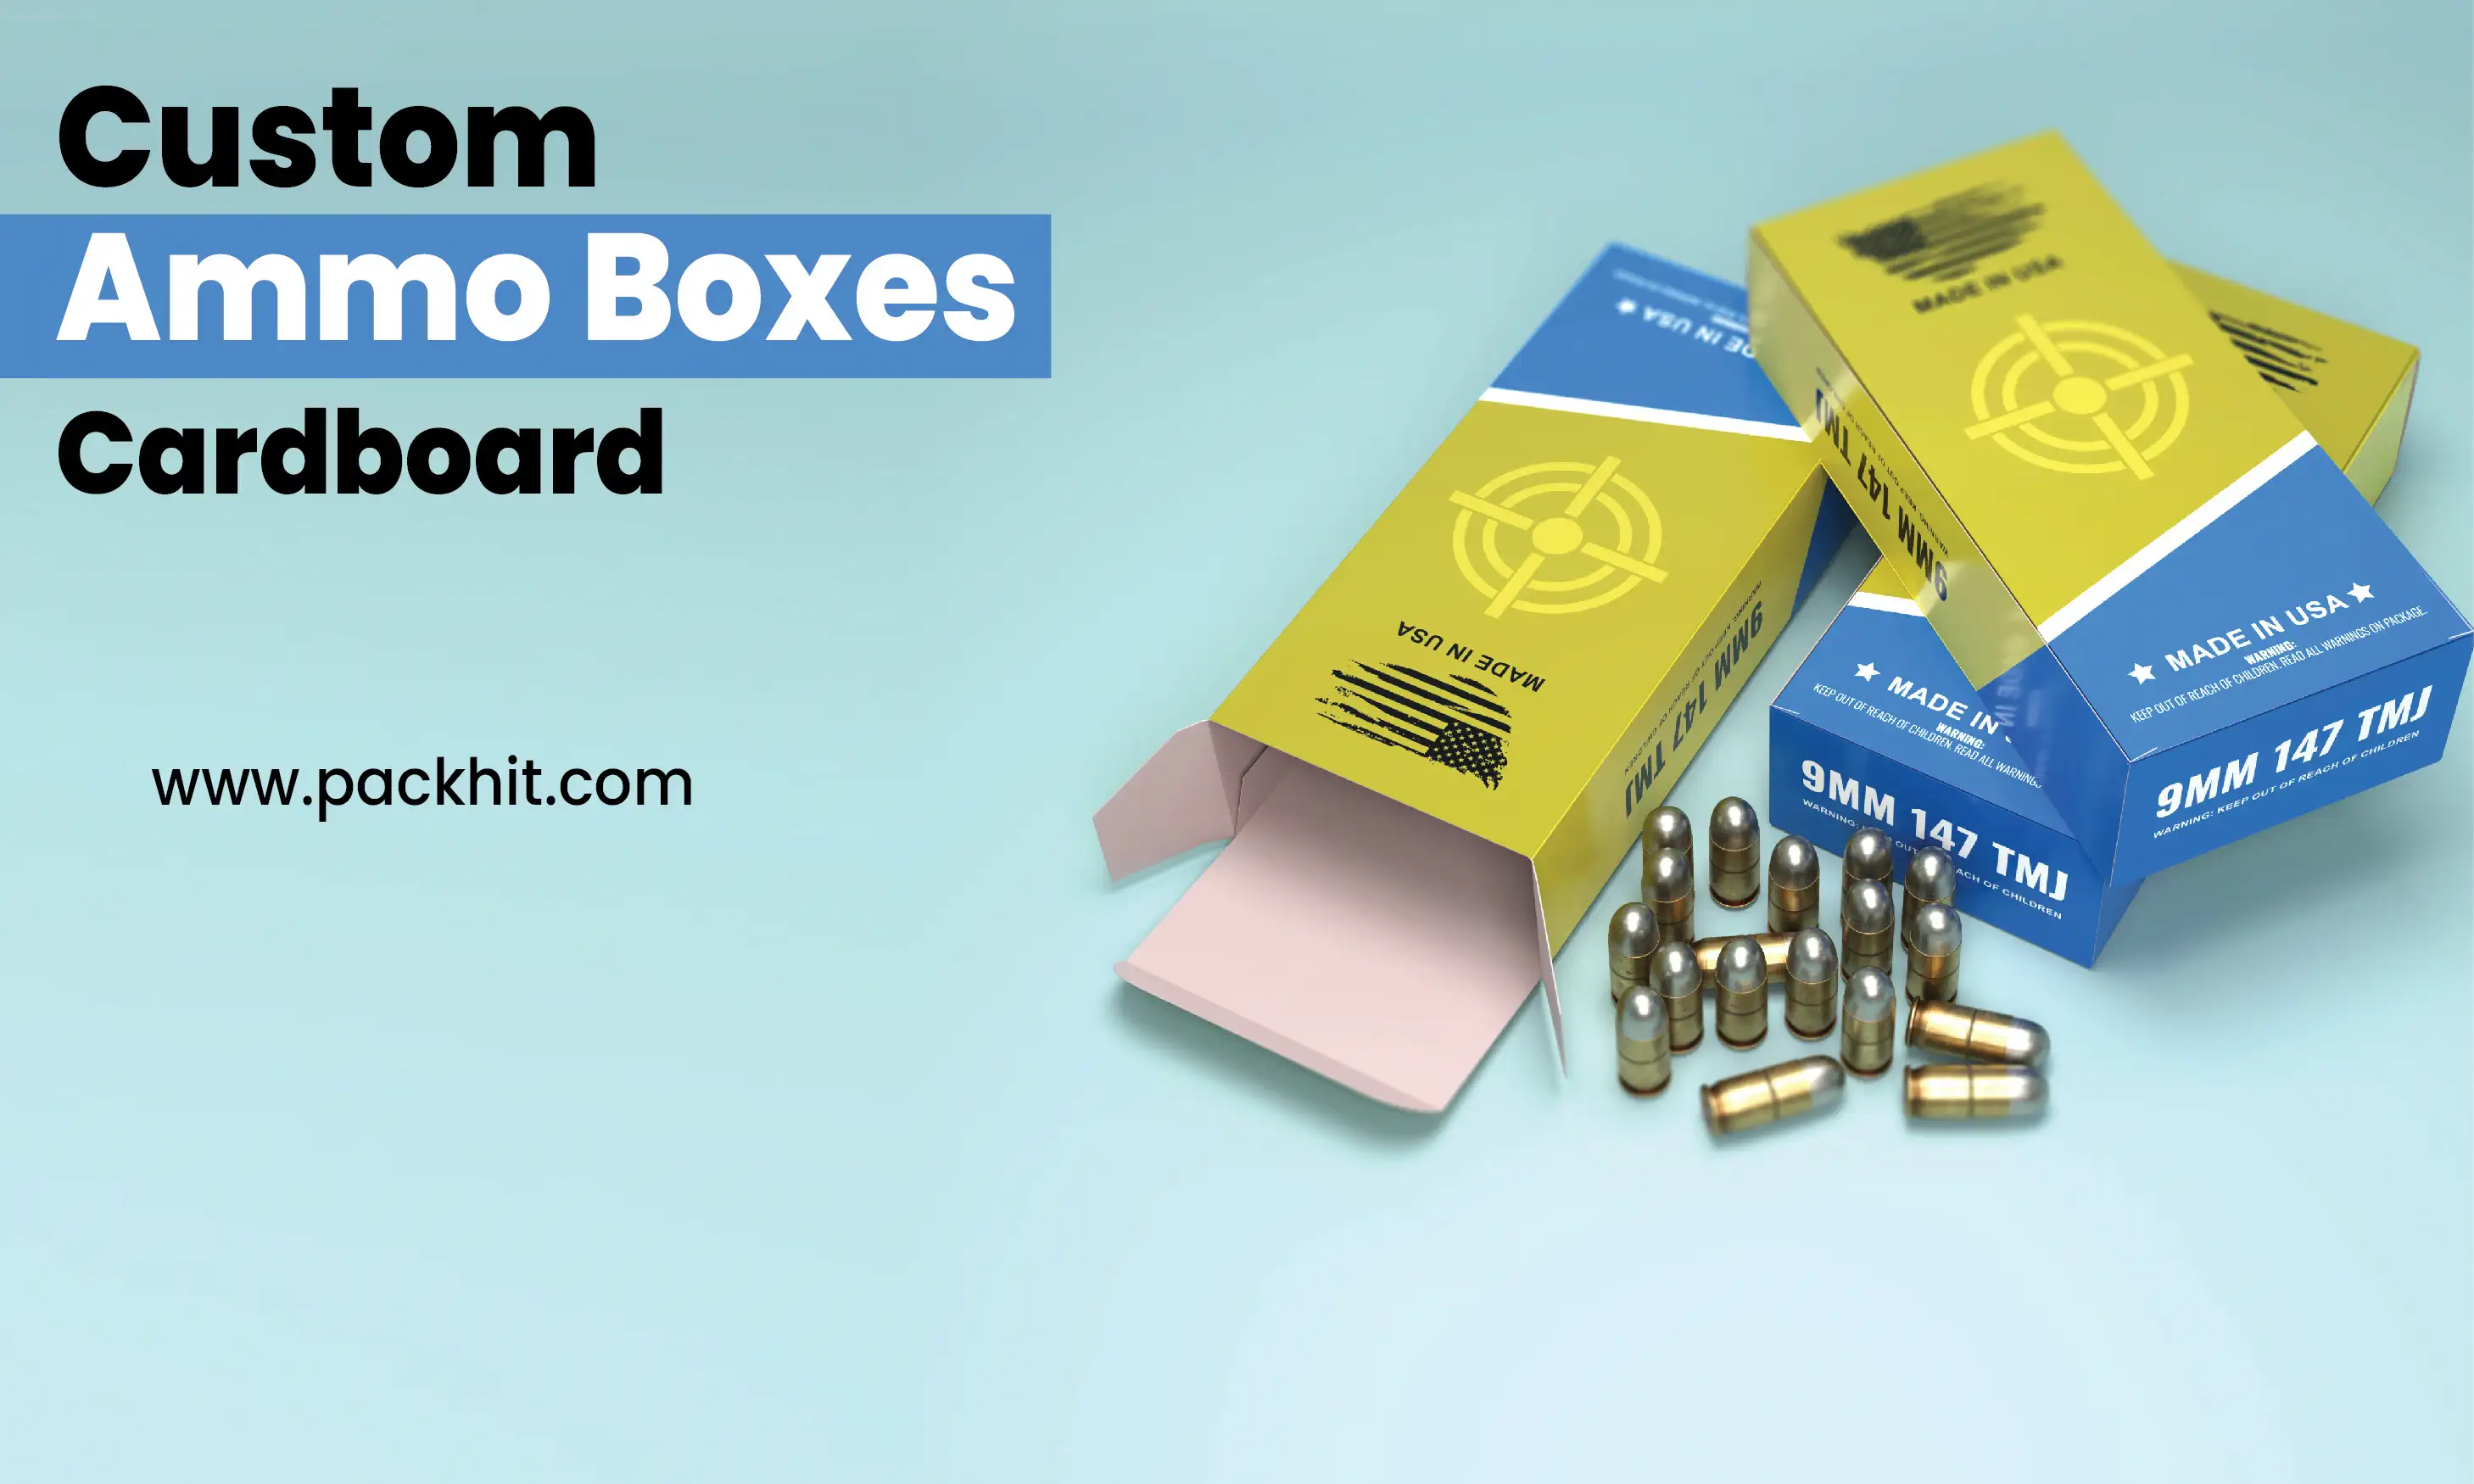 Cardboard Ammo Boxes